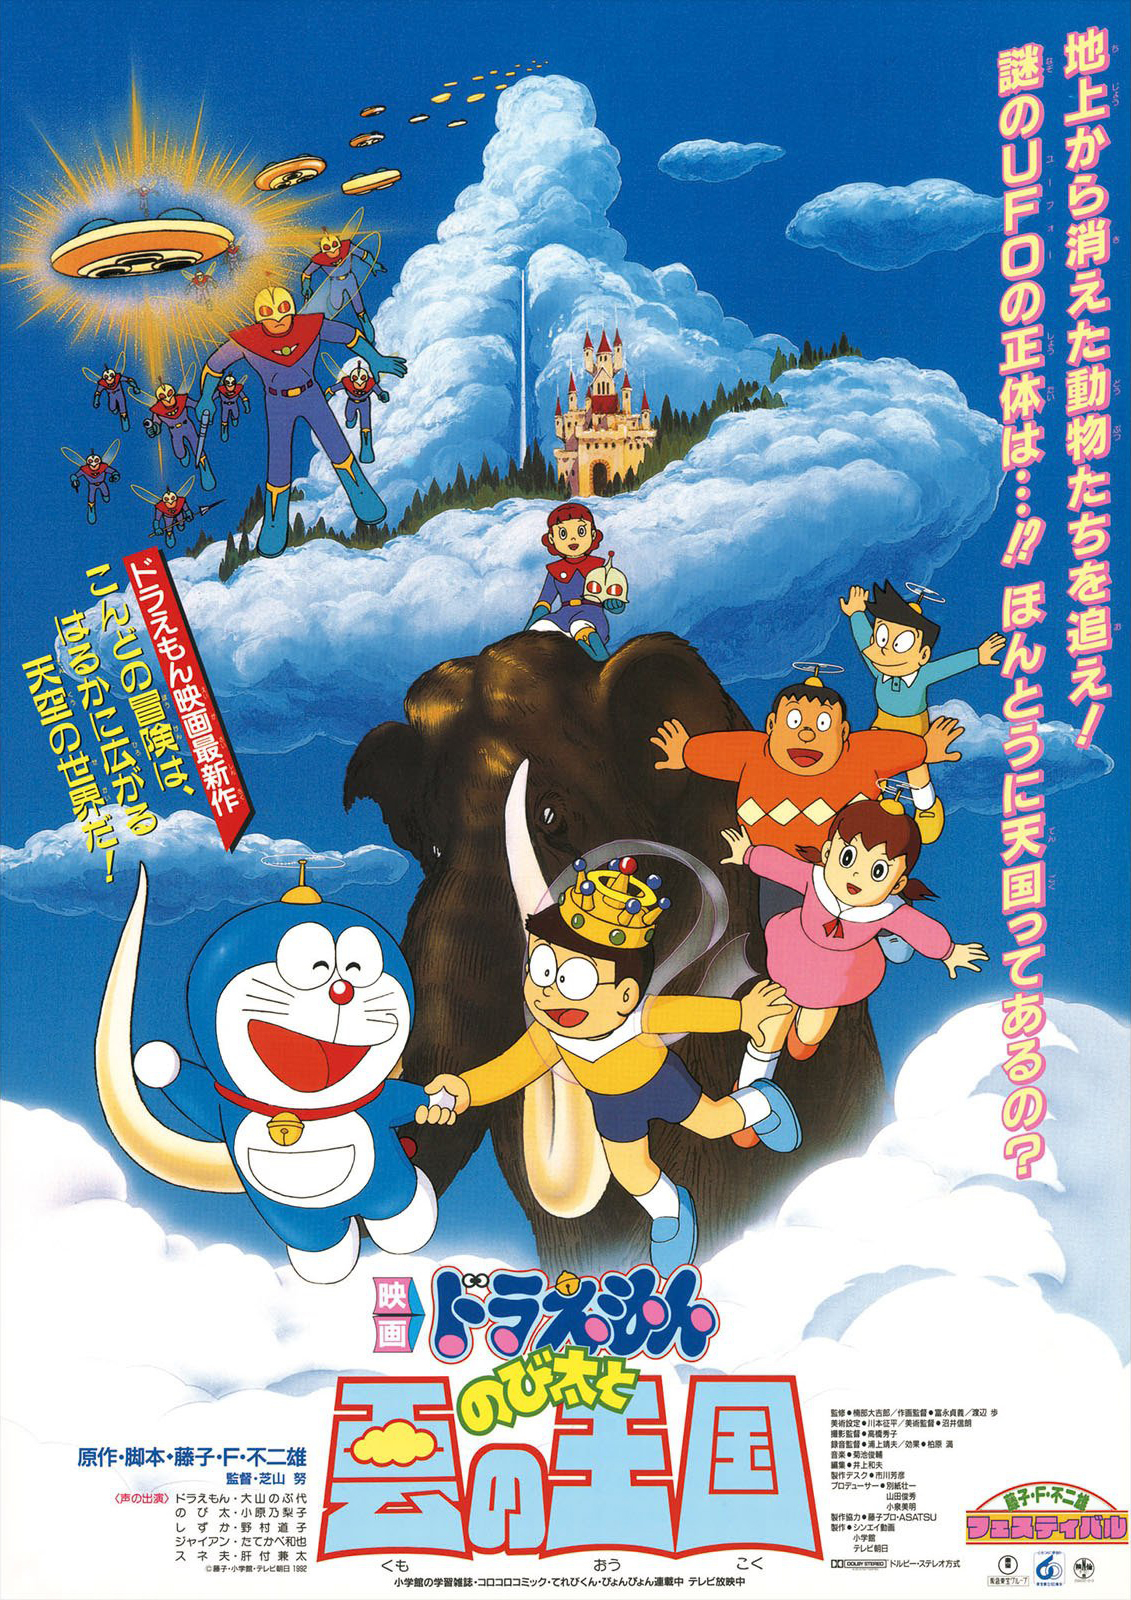 Doraemon The Movie 1992 โดเรม่อน เดอะมูฟวี่ ตอน บุกอาณาจักรเมฆ พากย์ไทย